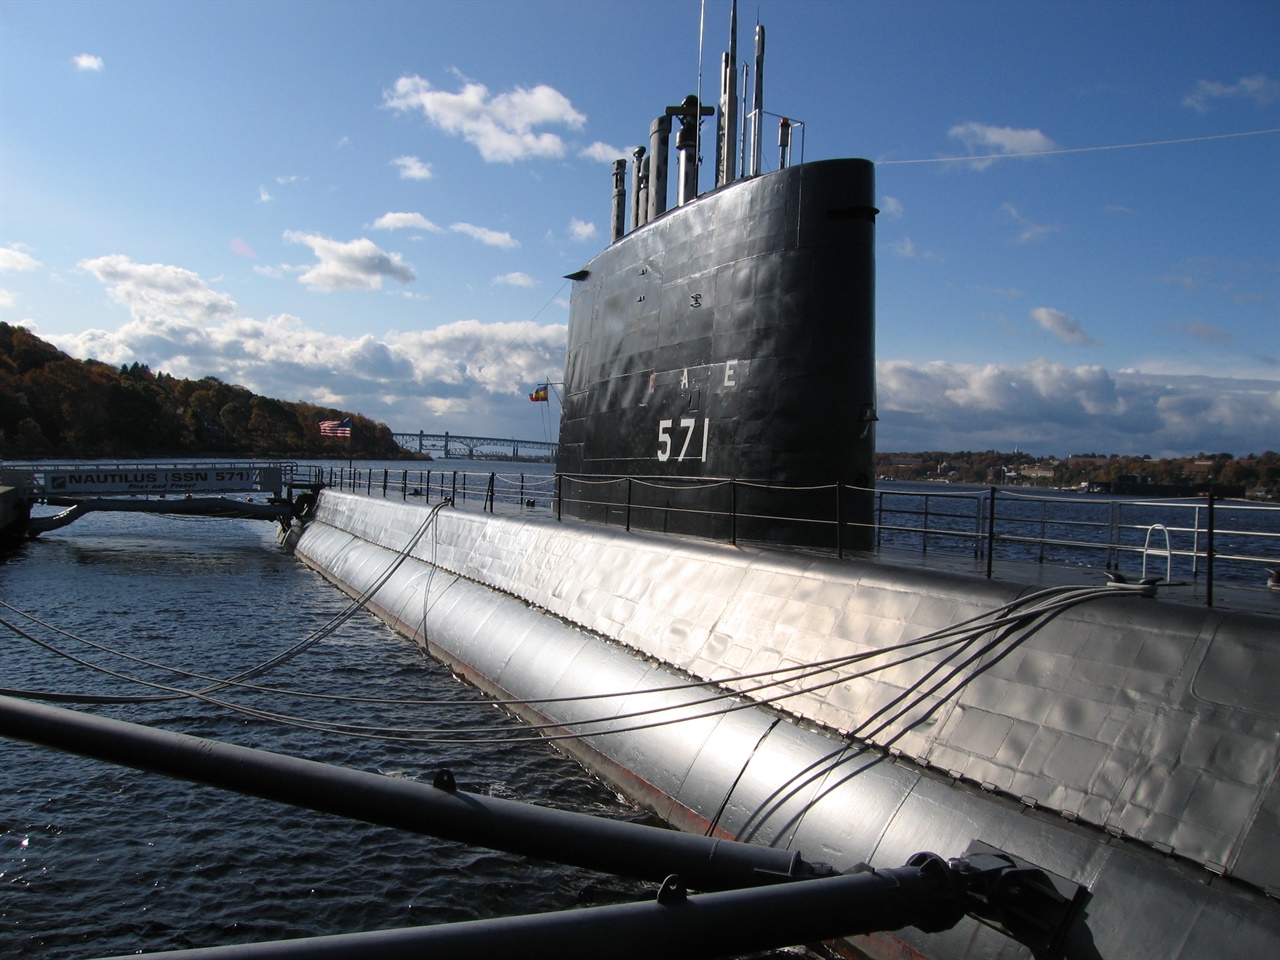  SSN-571 노틸러스는 1980년 퇴역했으며, 1982년 미국의 국가 역사 랜드마크에 지정되었다. 사진에서 보듯 노틸러스 호는 현재 코티컷의 그로튼에 위치한 잠수함대 잠수함 및 박물관에 박물관 배로 보존되어 있다.
